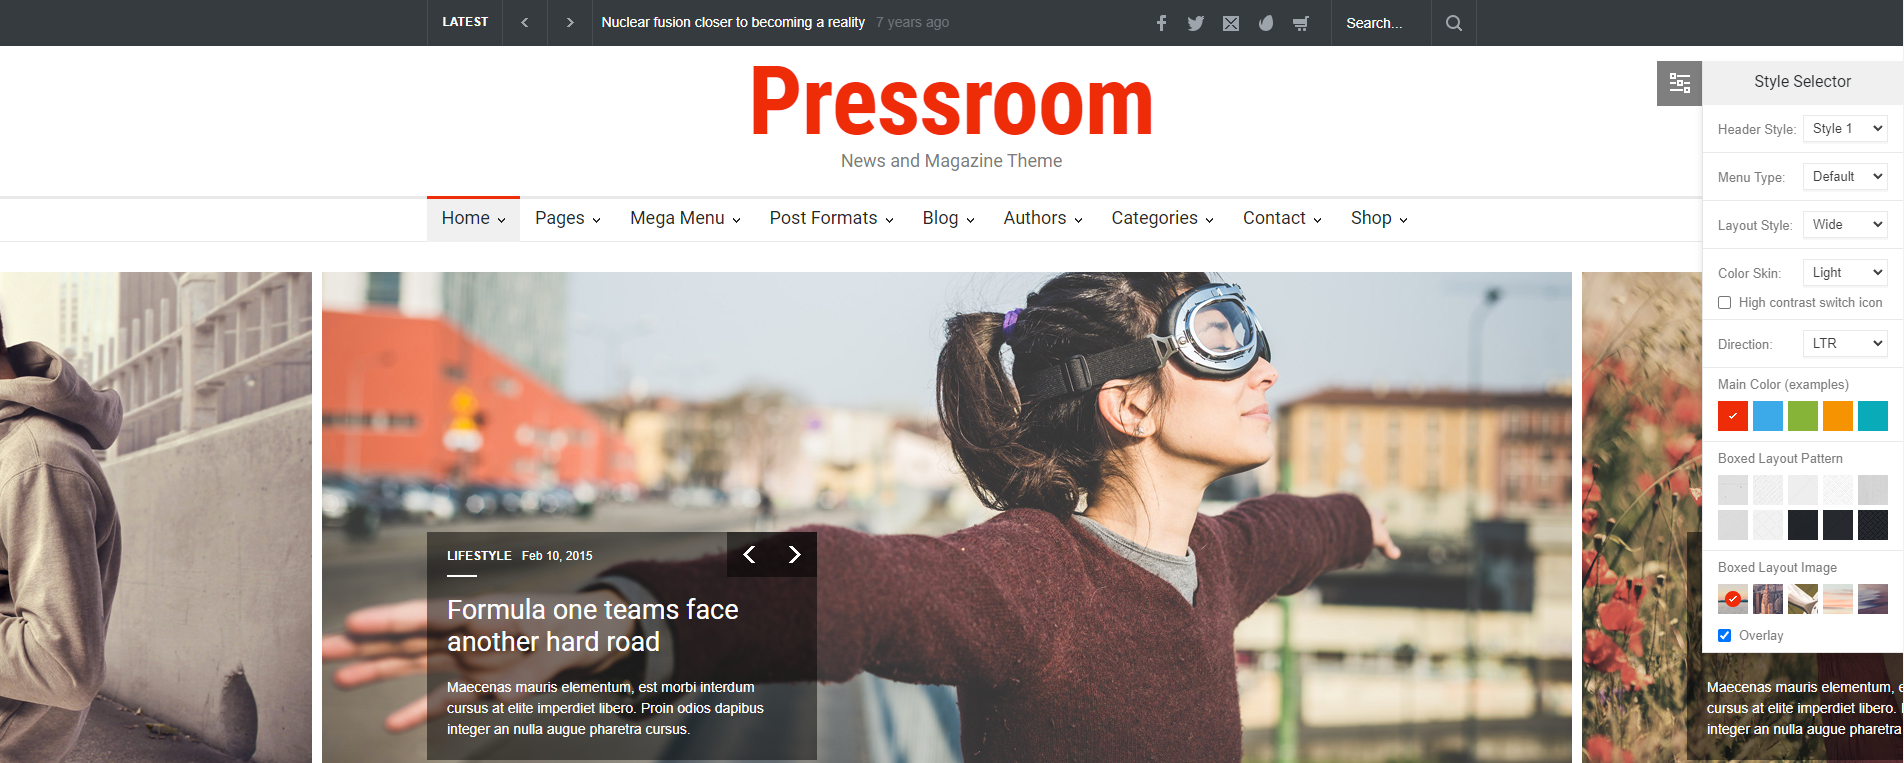 Pressroom - News and Magazine WordPress Theme 4